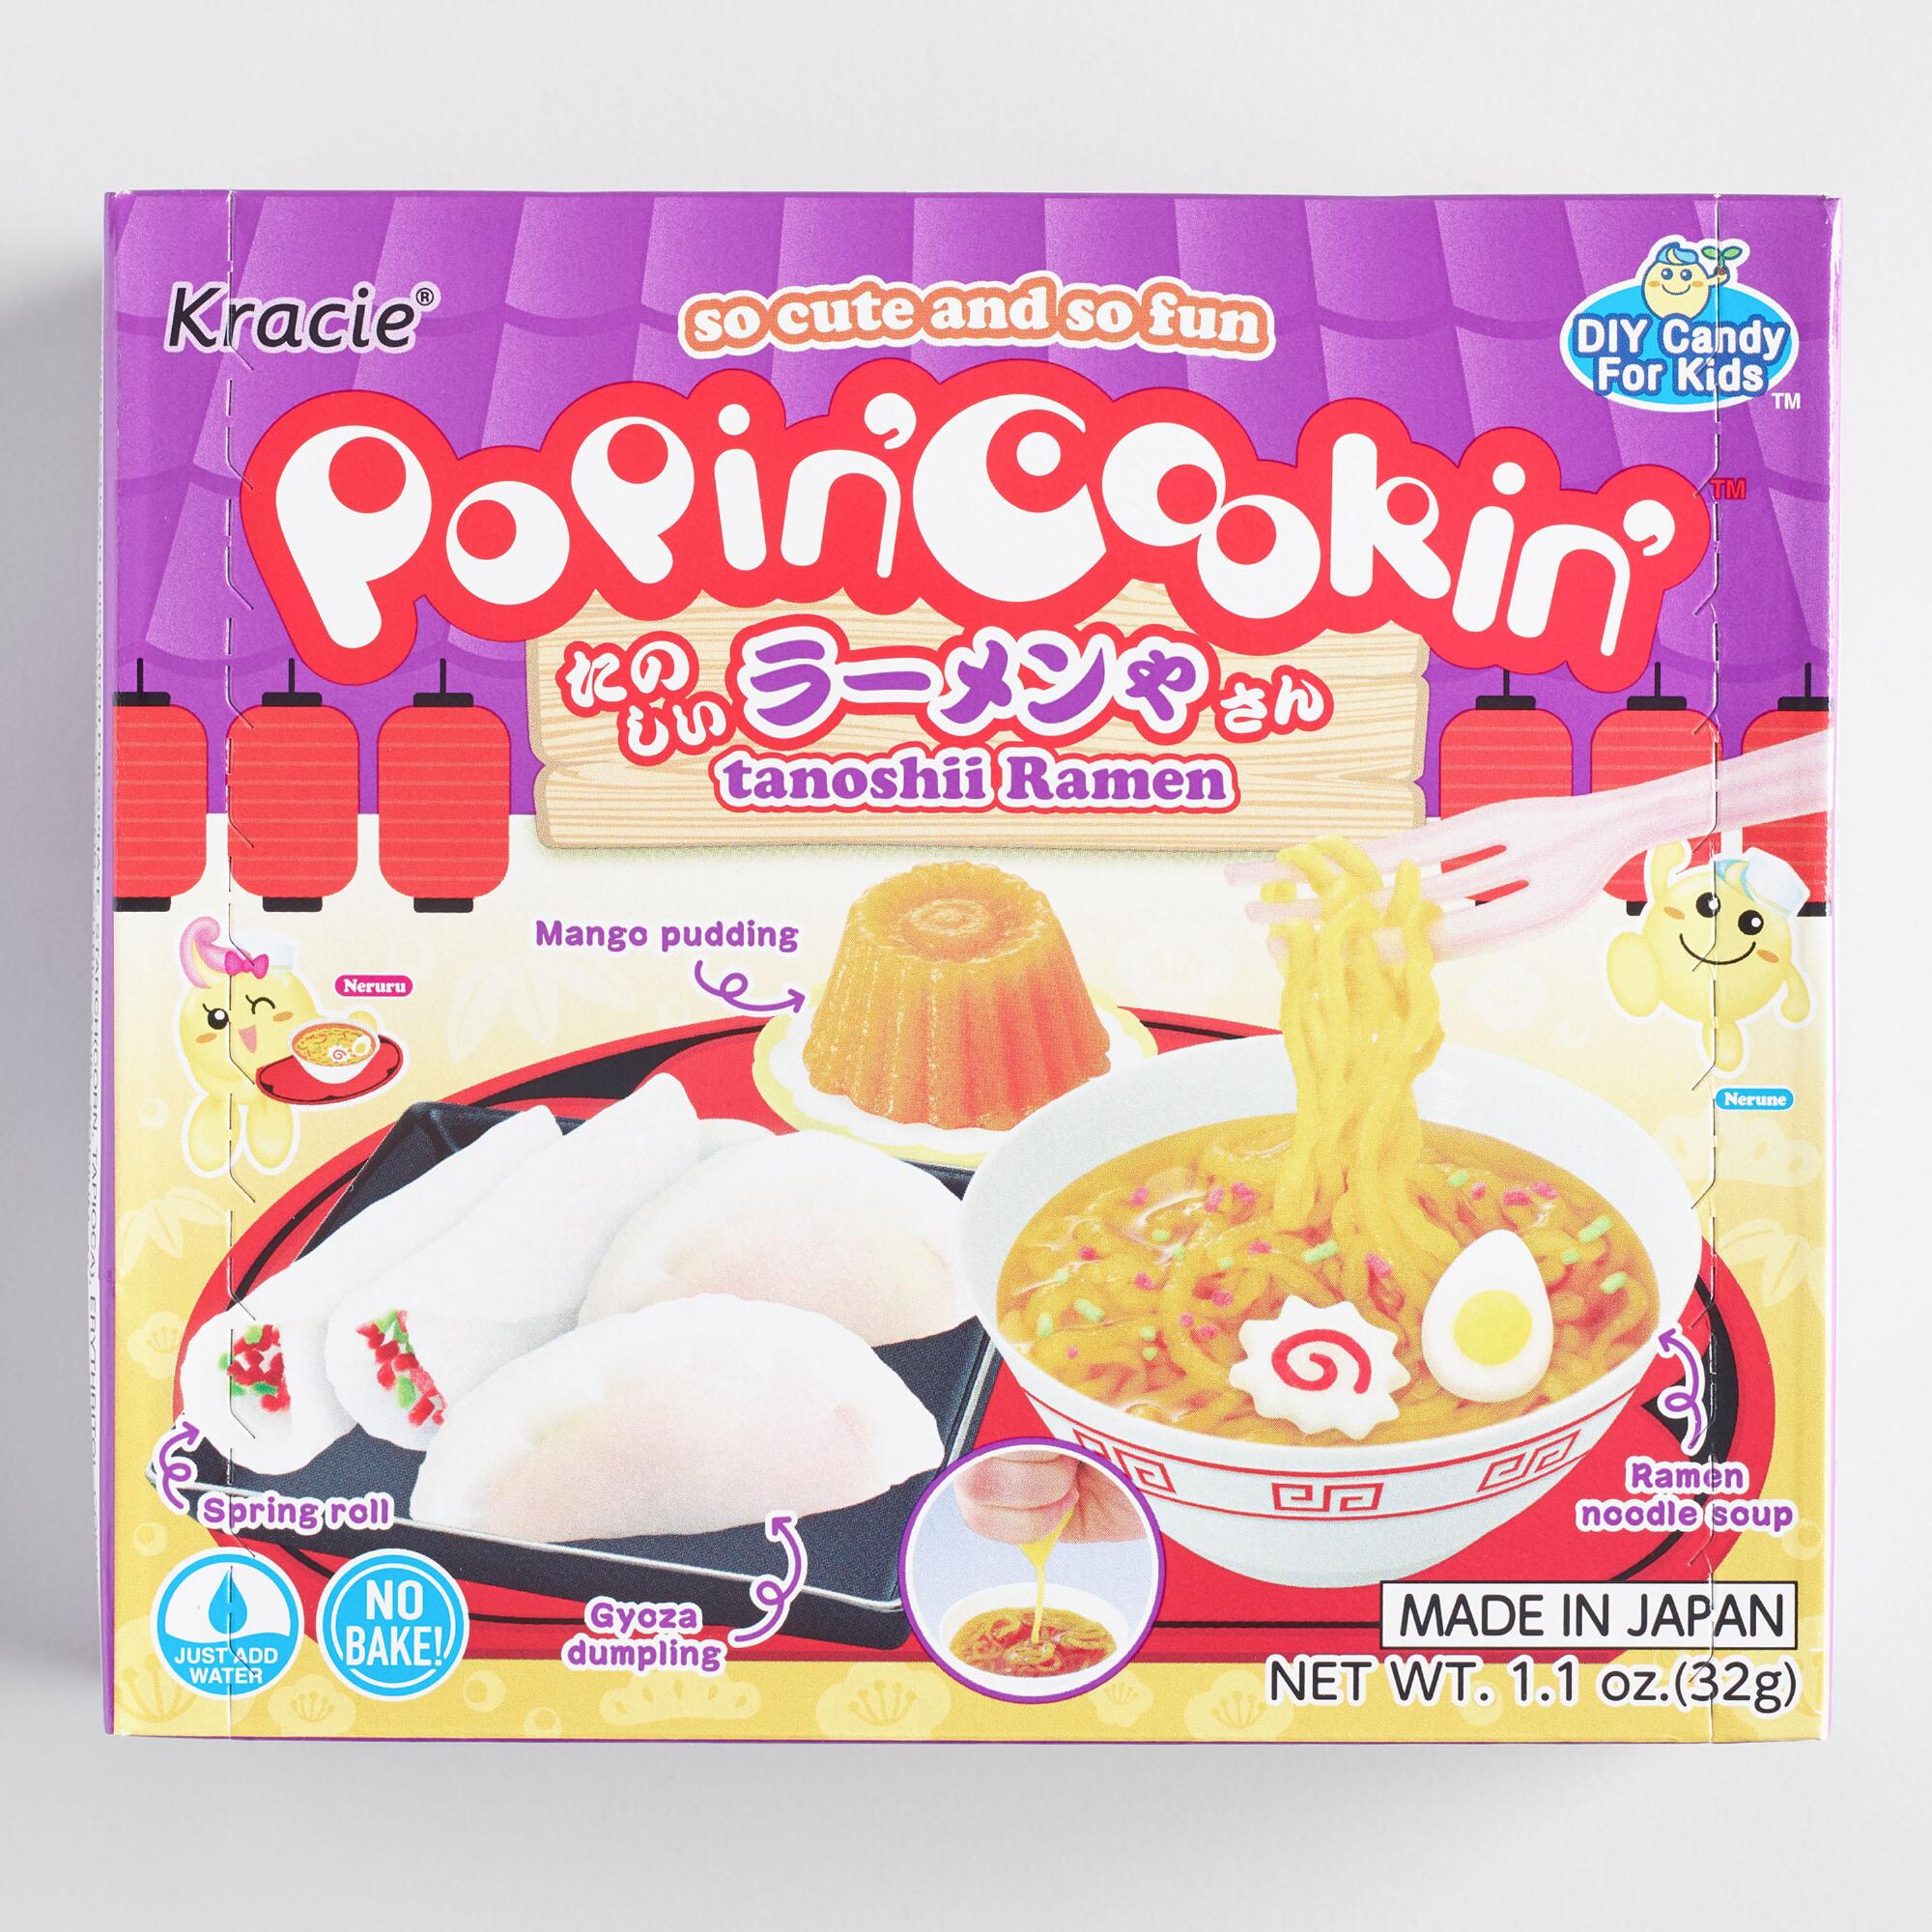 Kracie Popin Cookin Ramen DIY Candy Kit by World Market